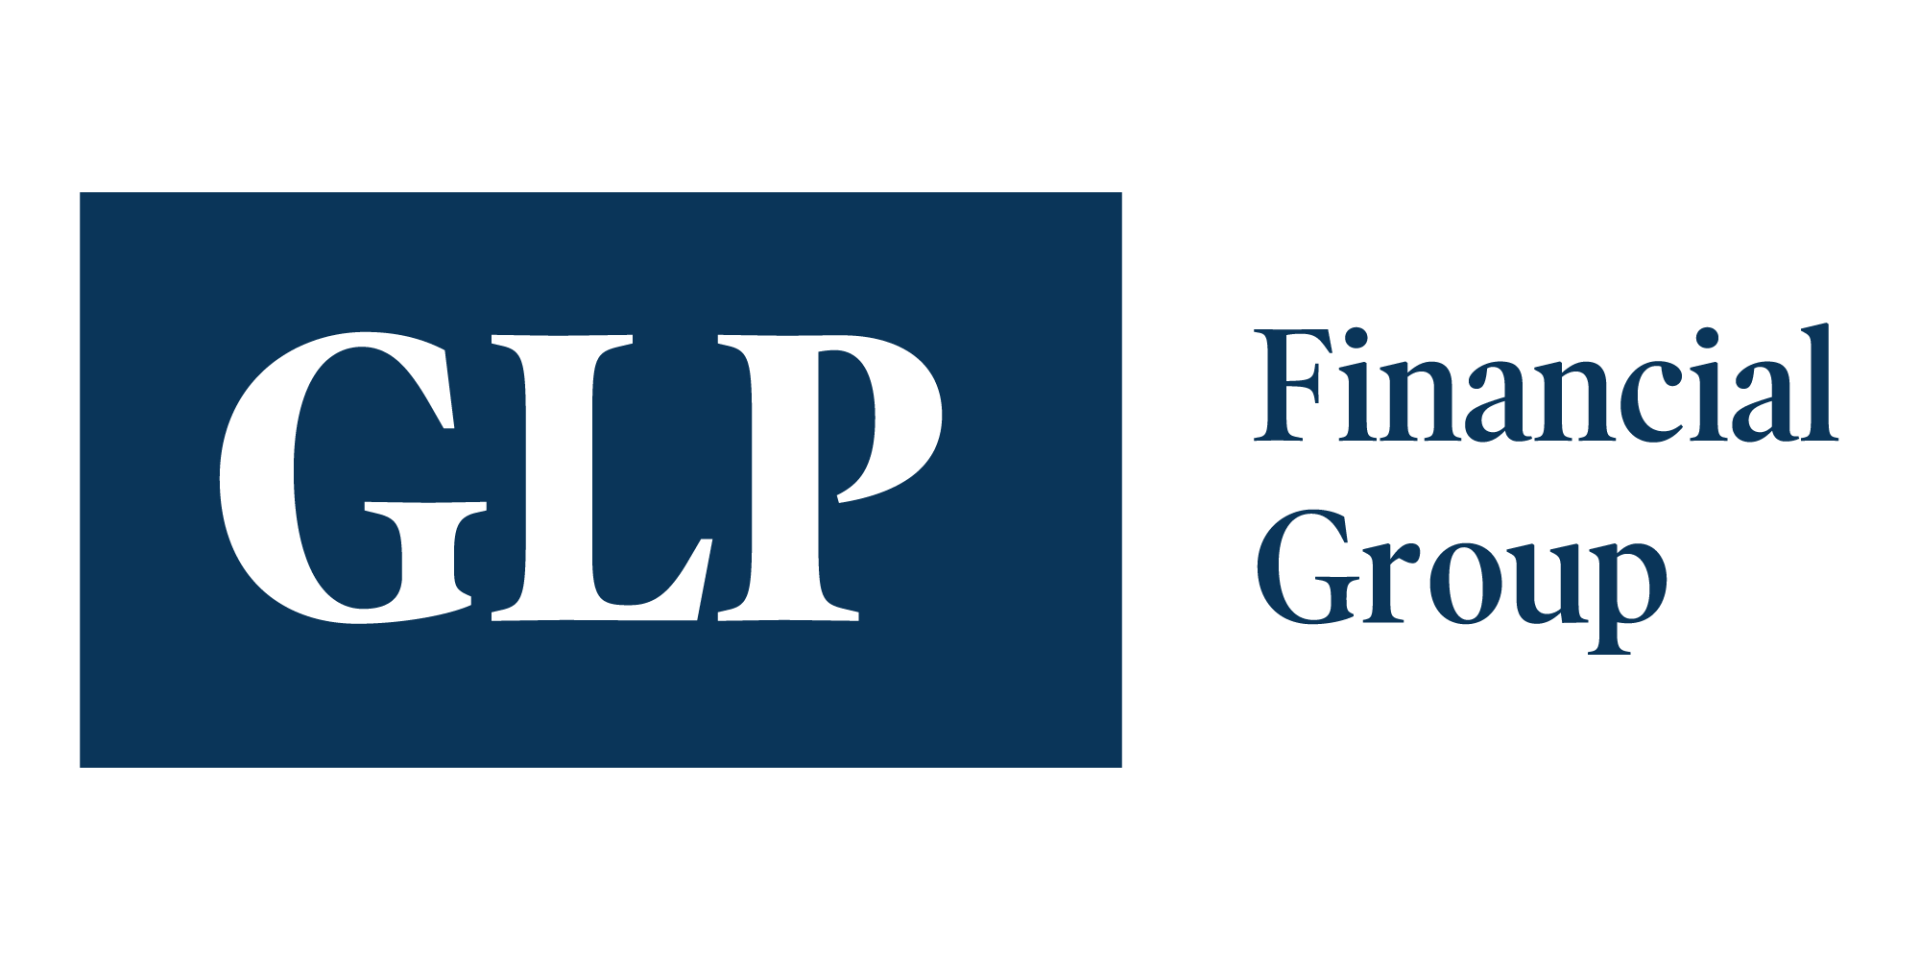 GLP Investment Services, LLC - Logo